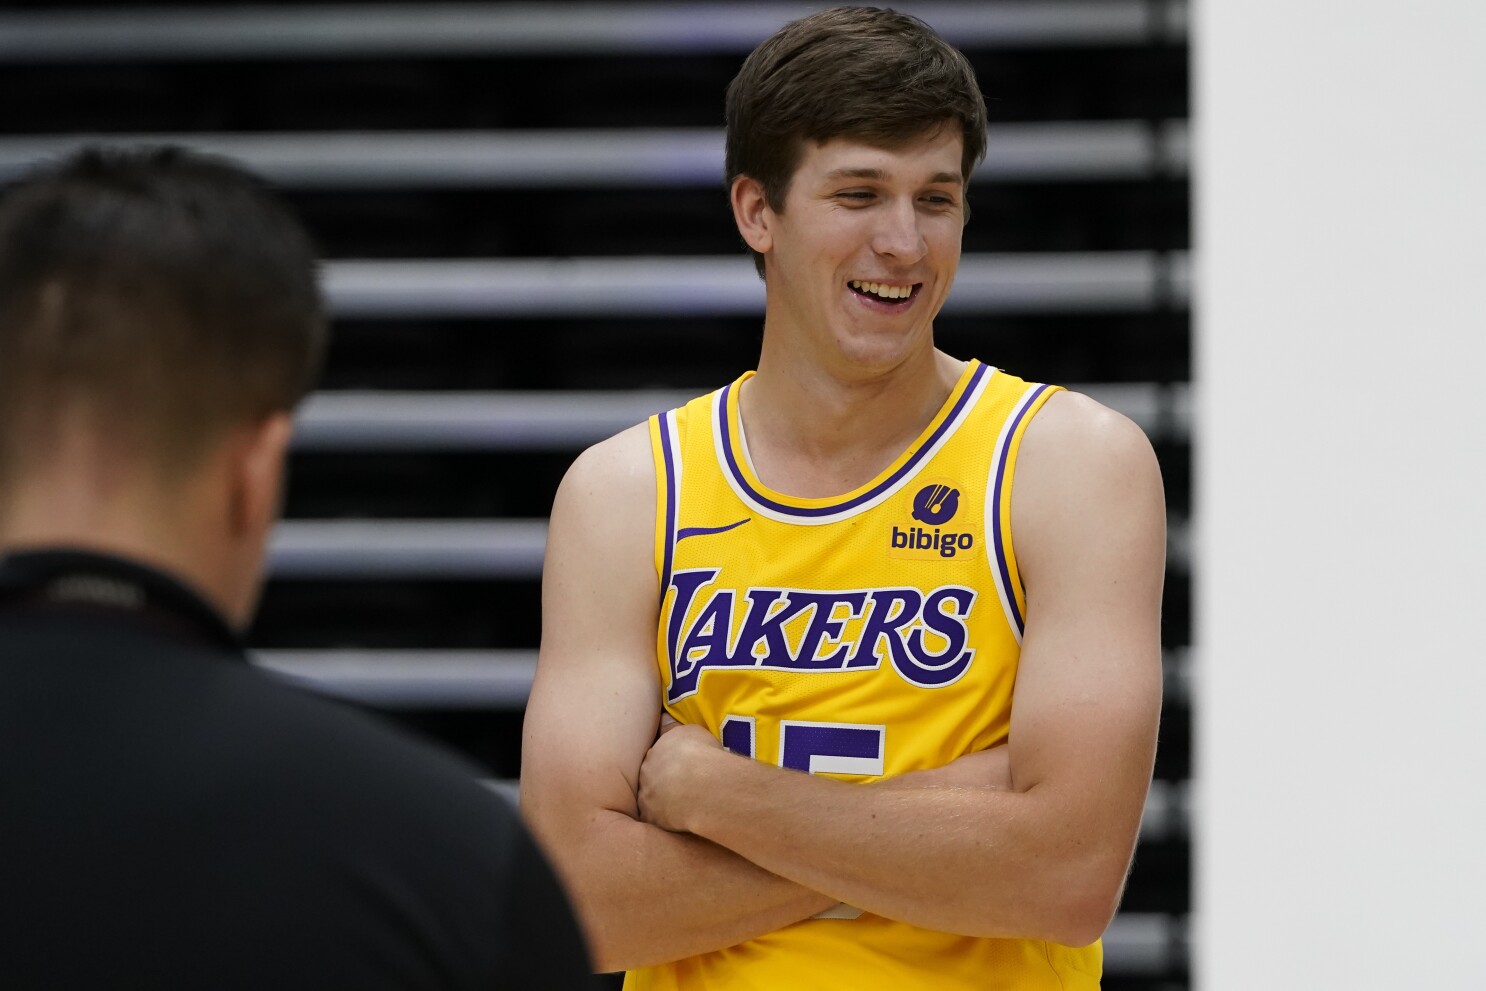 Steve Kerr sees Lakers' Austin Reaves as one of NBA's 'rising